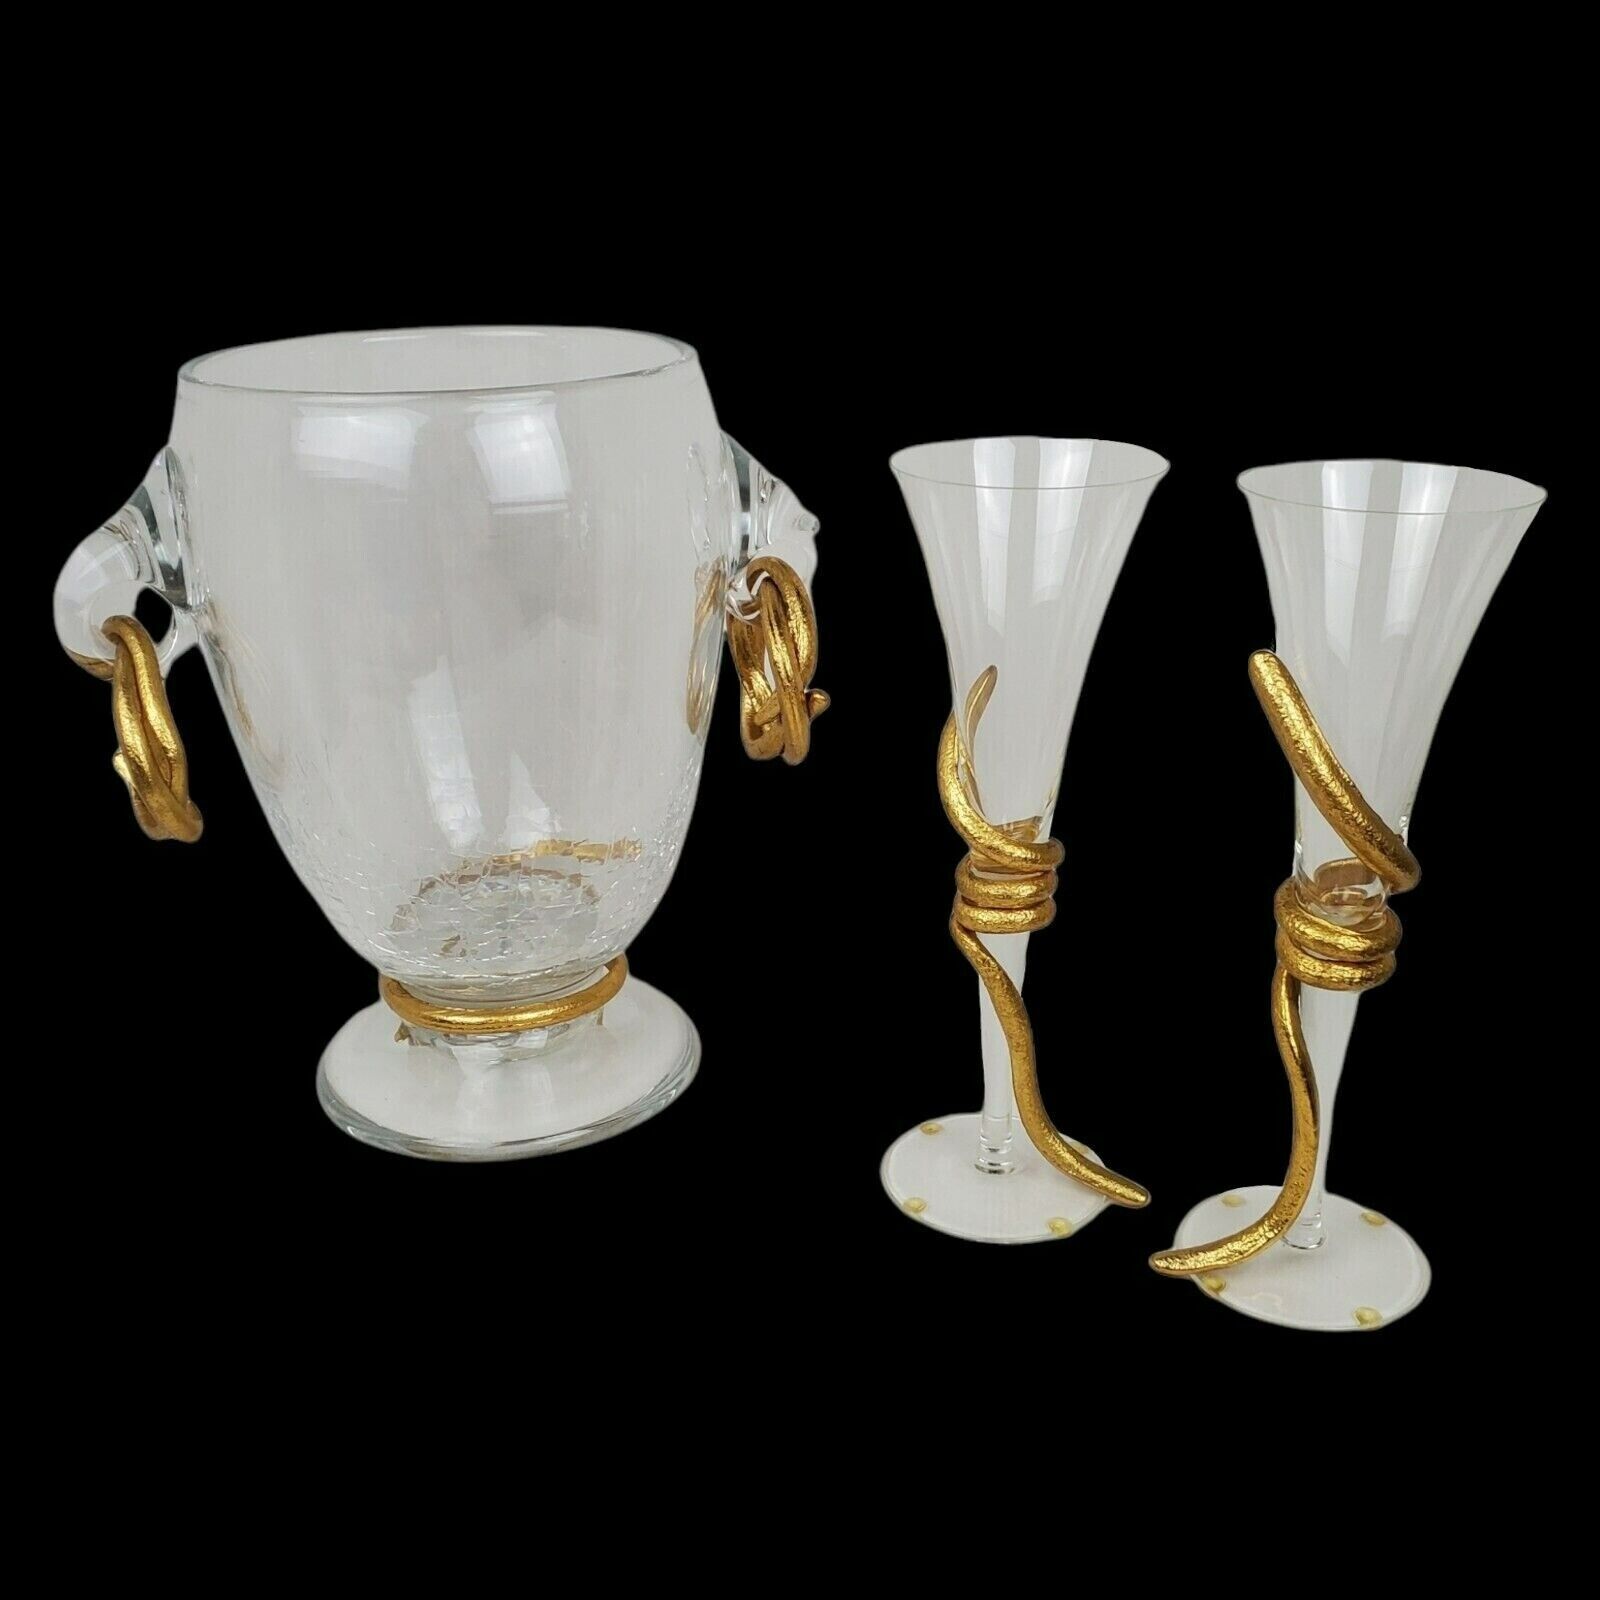 David Rucli Paris Luxury Artisan Glass Champagne Flutes Gold Ice Cooler Bucket